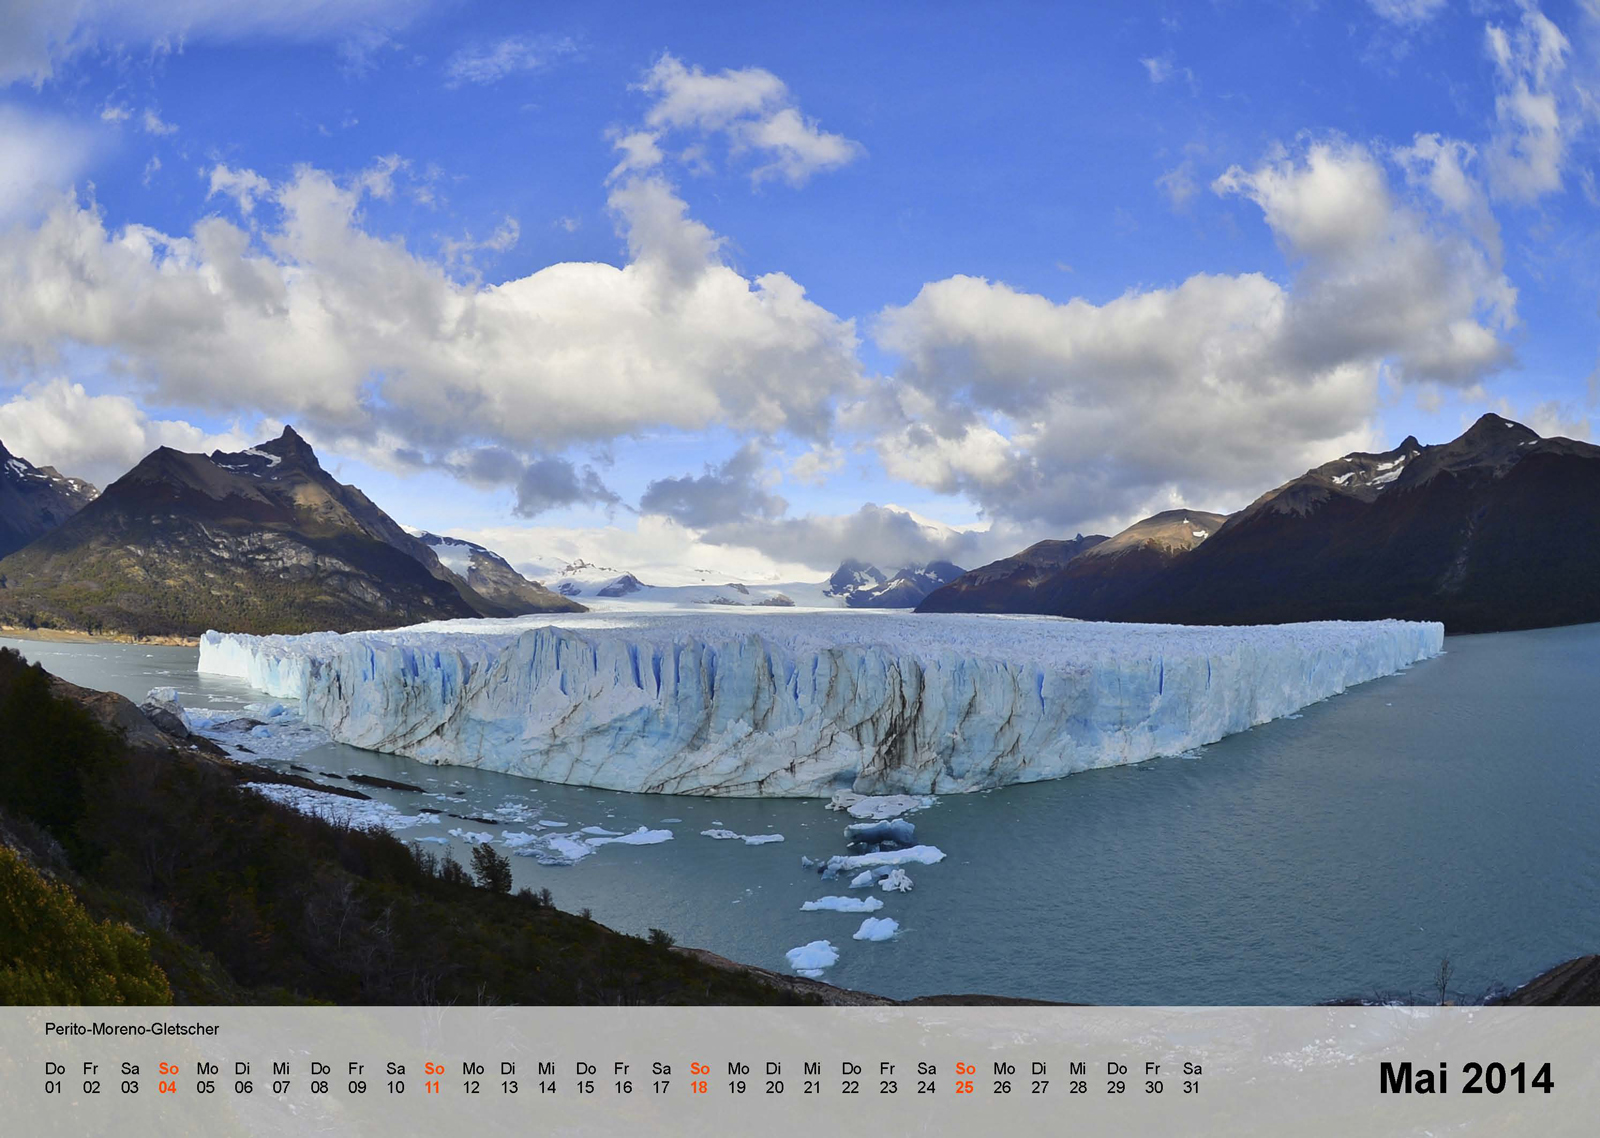 Perito-Moreno-Gletscher | Argentinien | Kalender 2014 - Mai